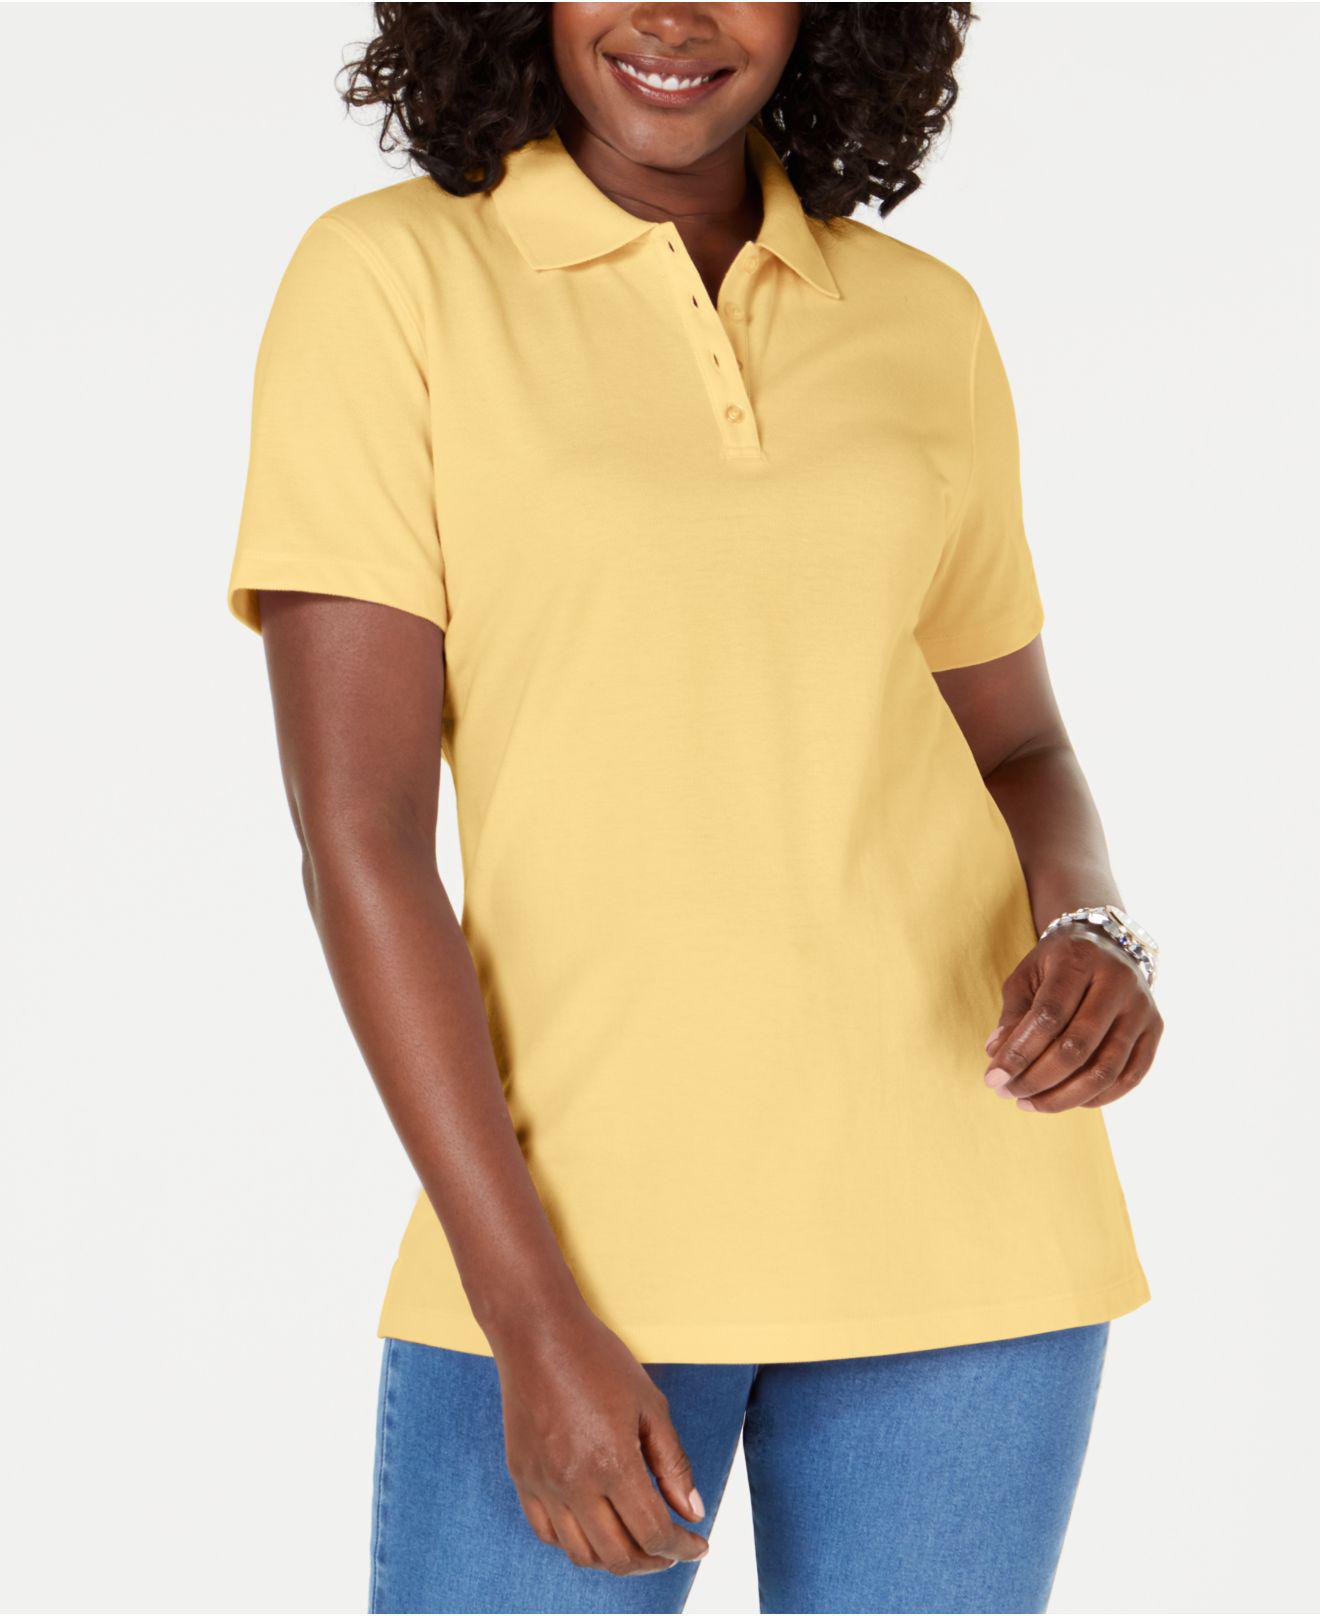 Lyst - Karen Scott Cotton Piqué Polo Top, Created For Macy's in Yellow